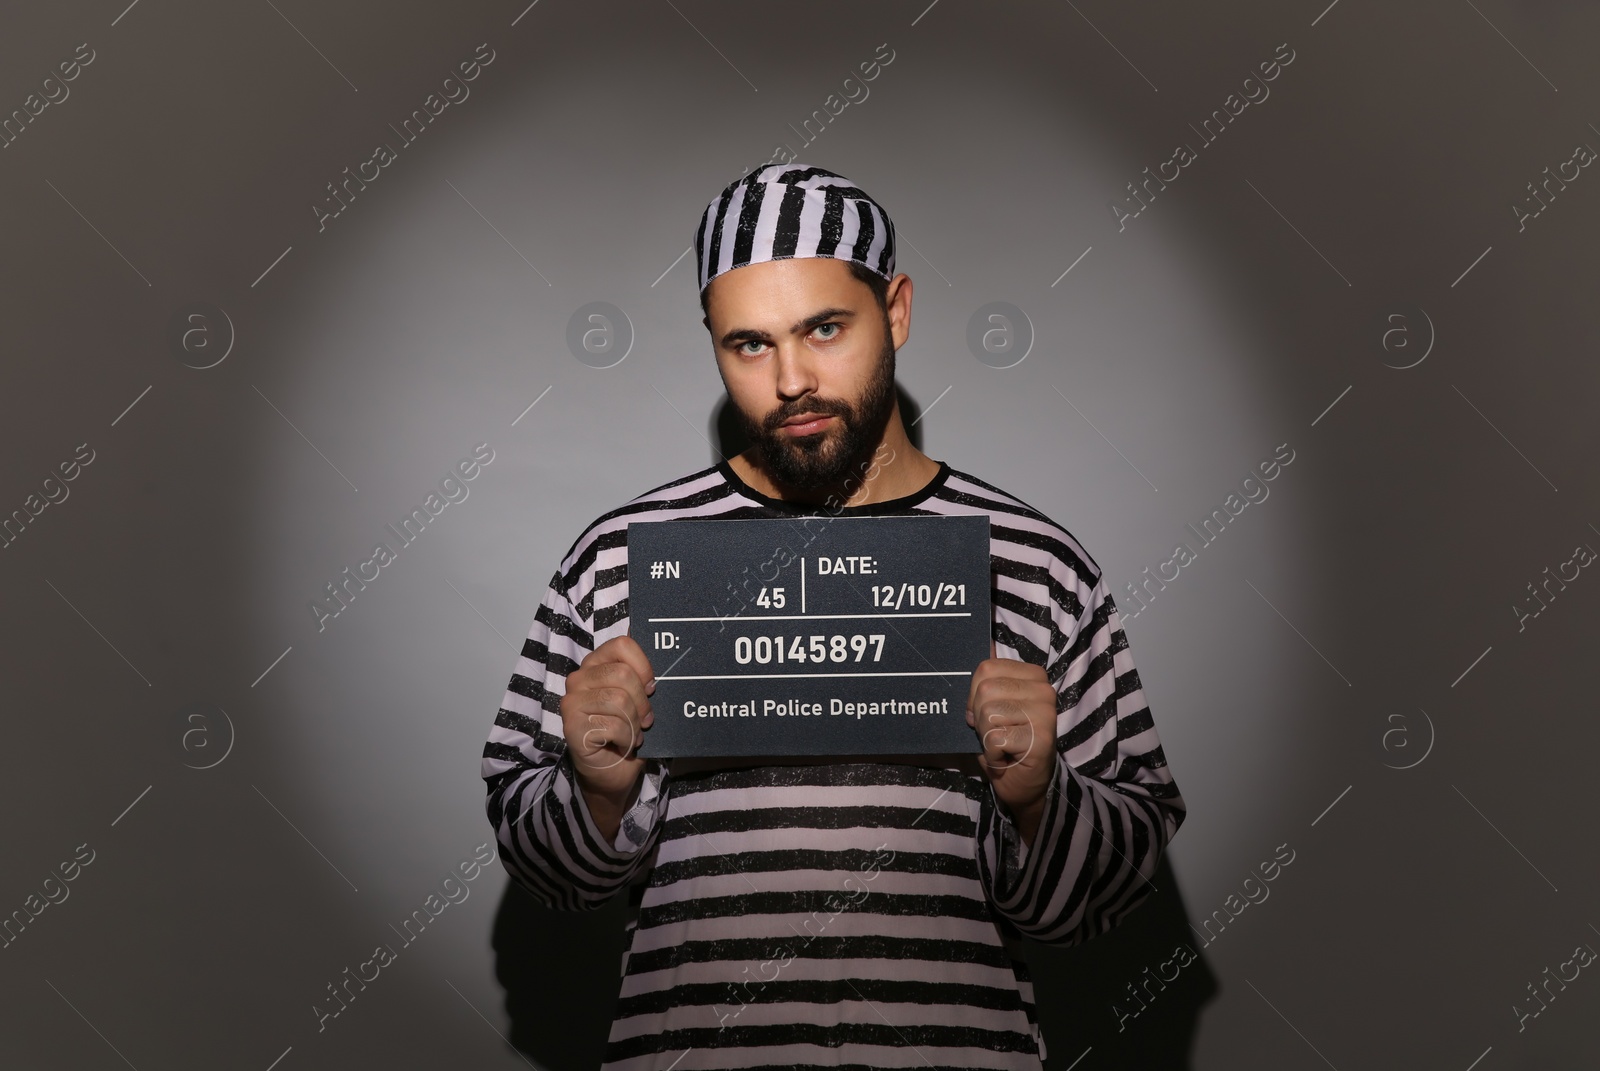 Photo of Prisoner in special uniform with mugshot letter board 
on grey background